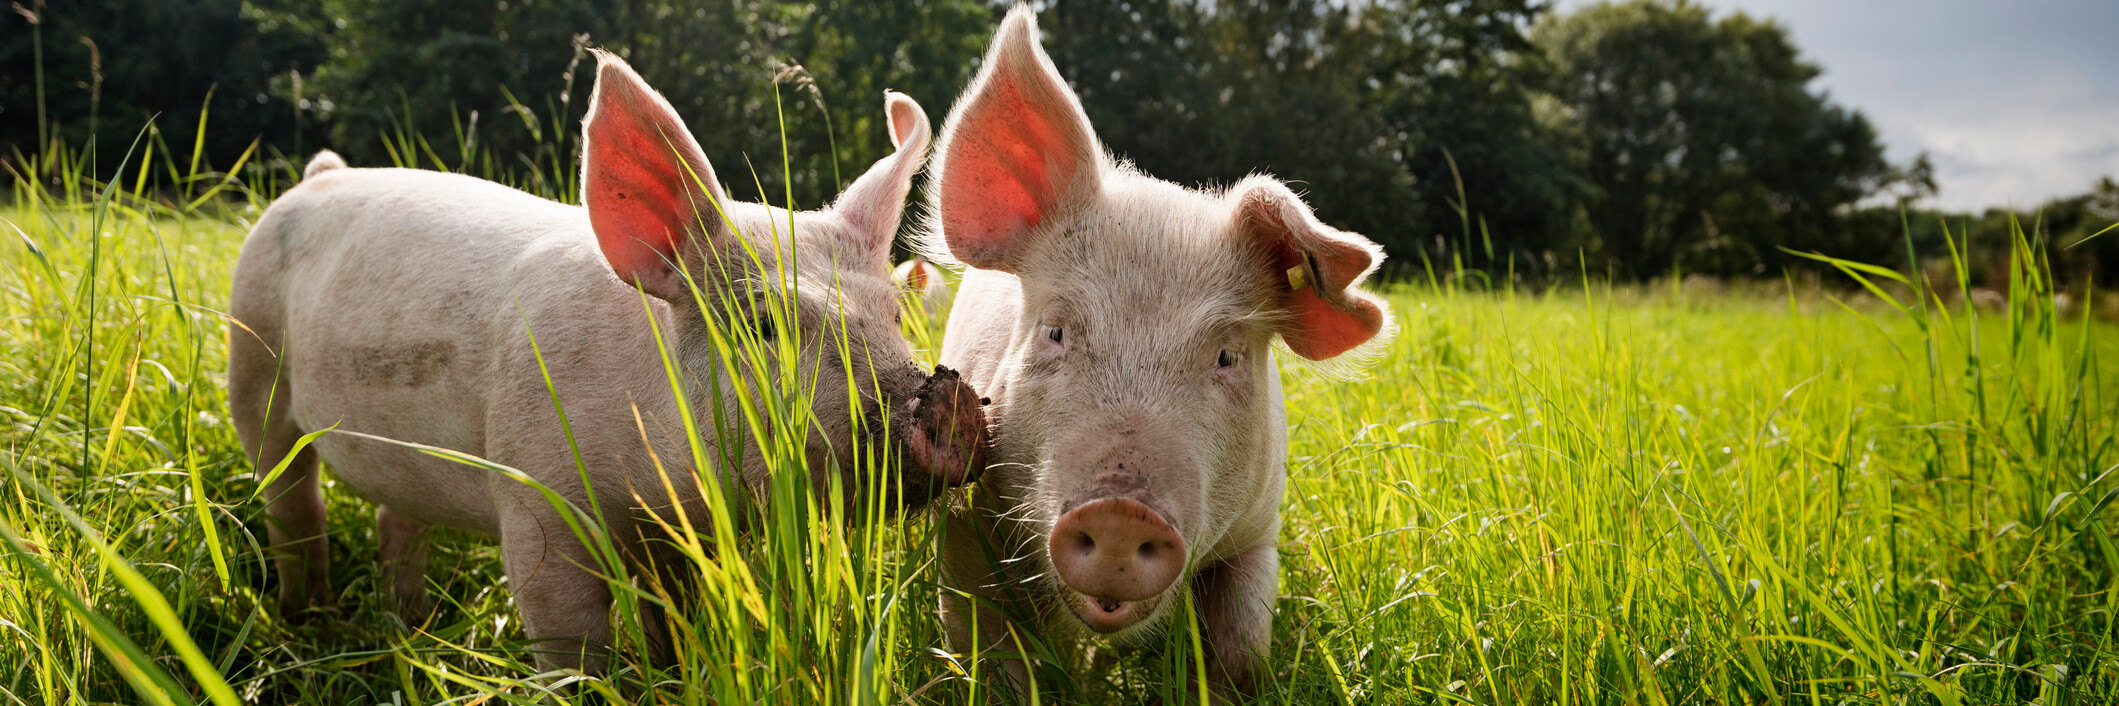 How To Raise Pigs On Your Hobby Farm